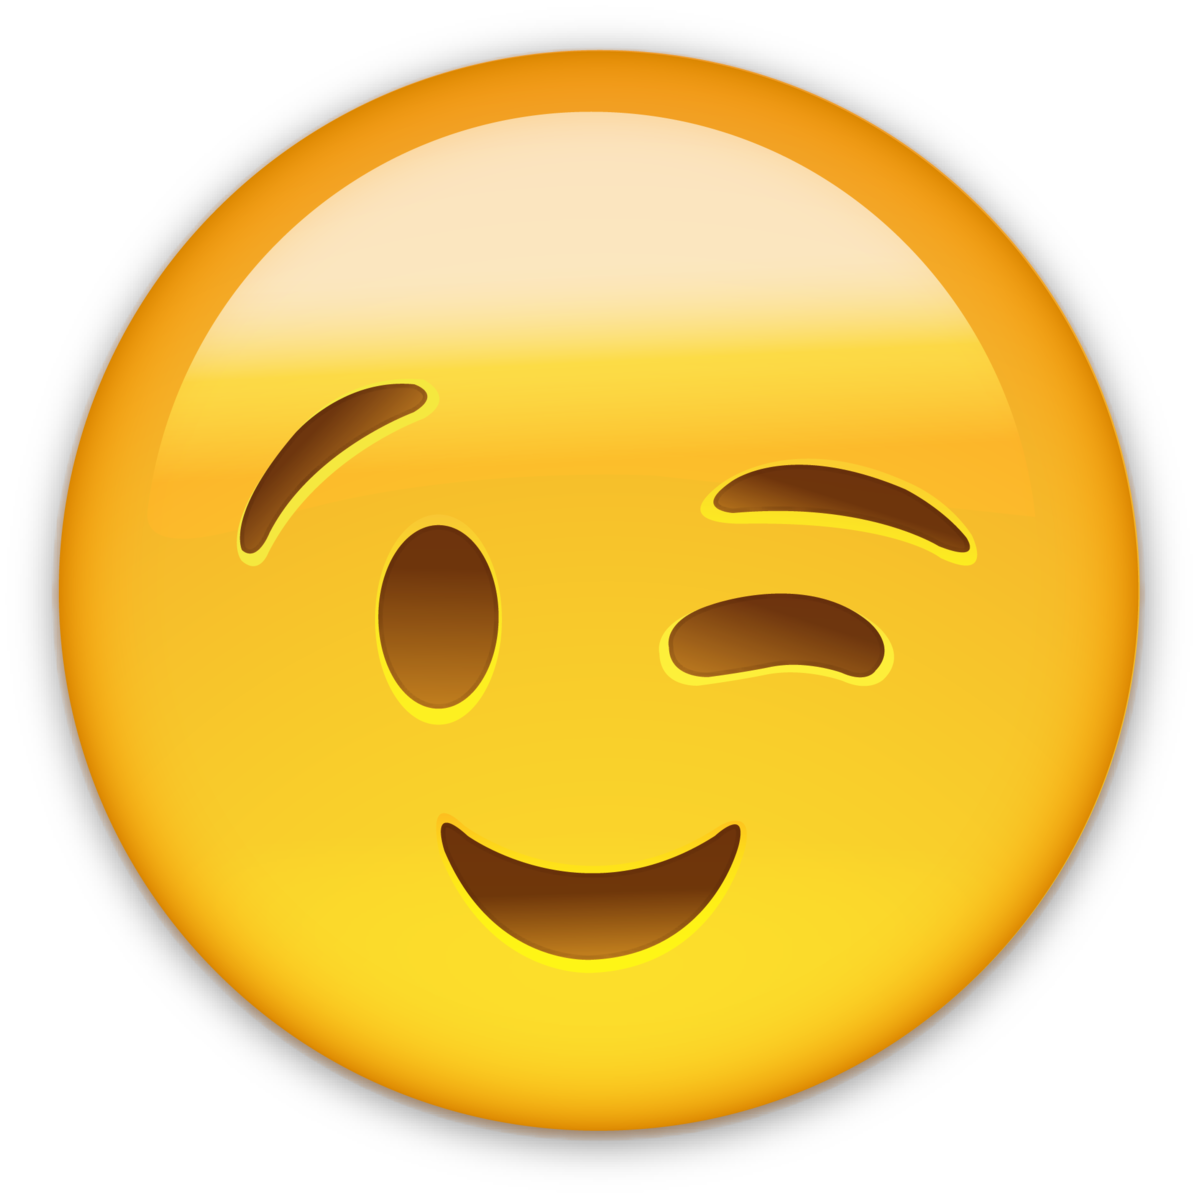 Download Emoticon Smiley Wink Smile Whatsapp Emoji HQ PNG Image FreePNGImg.